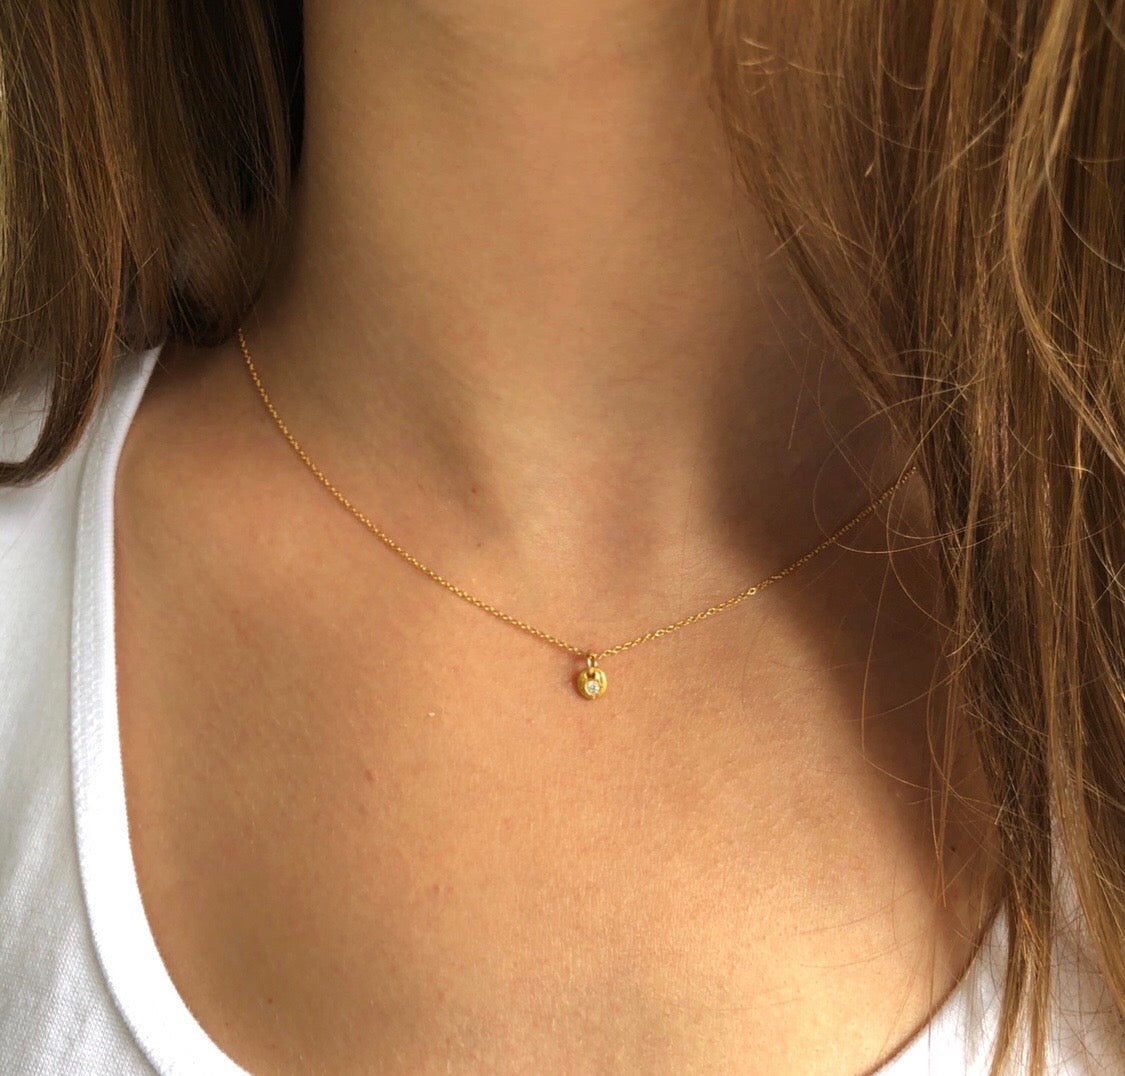 Little Lights Charm Necklace Gold - MAS Designs